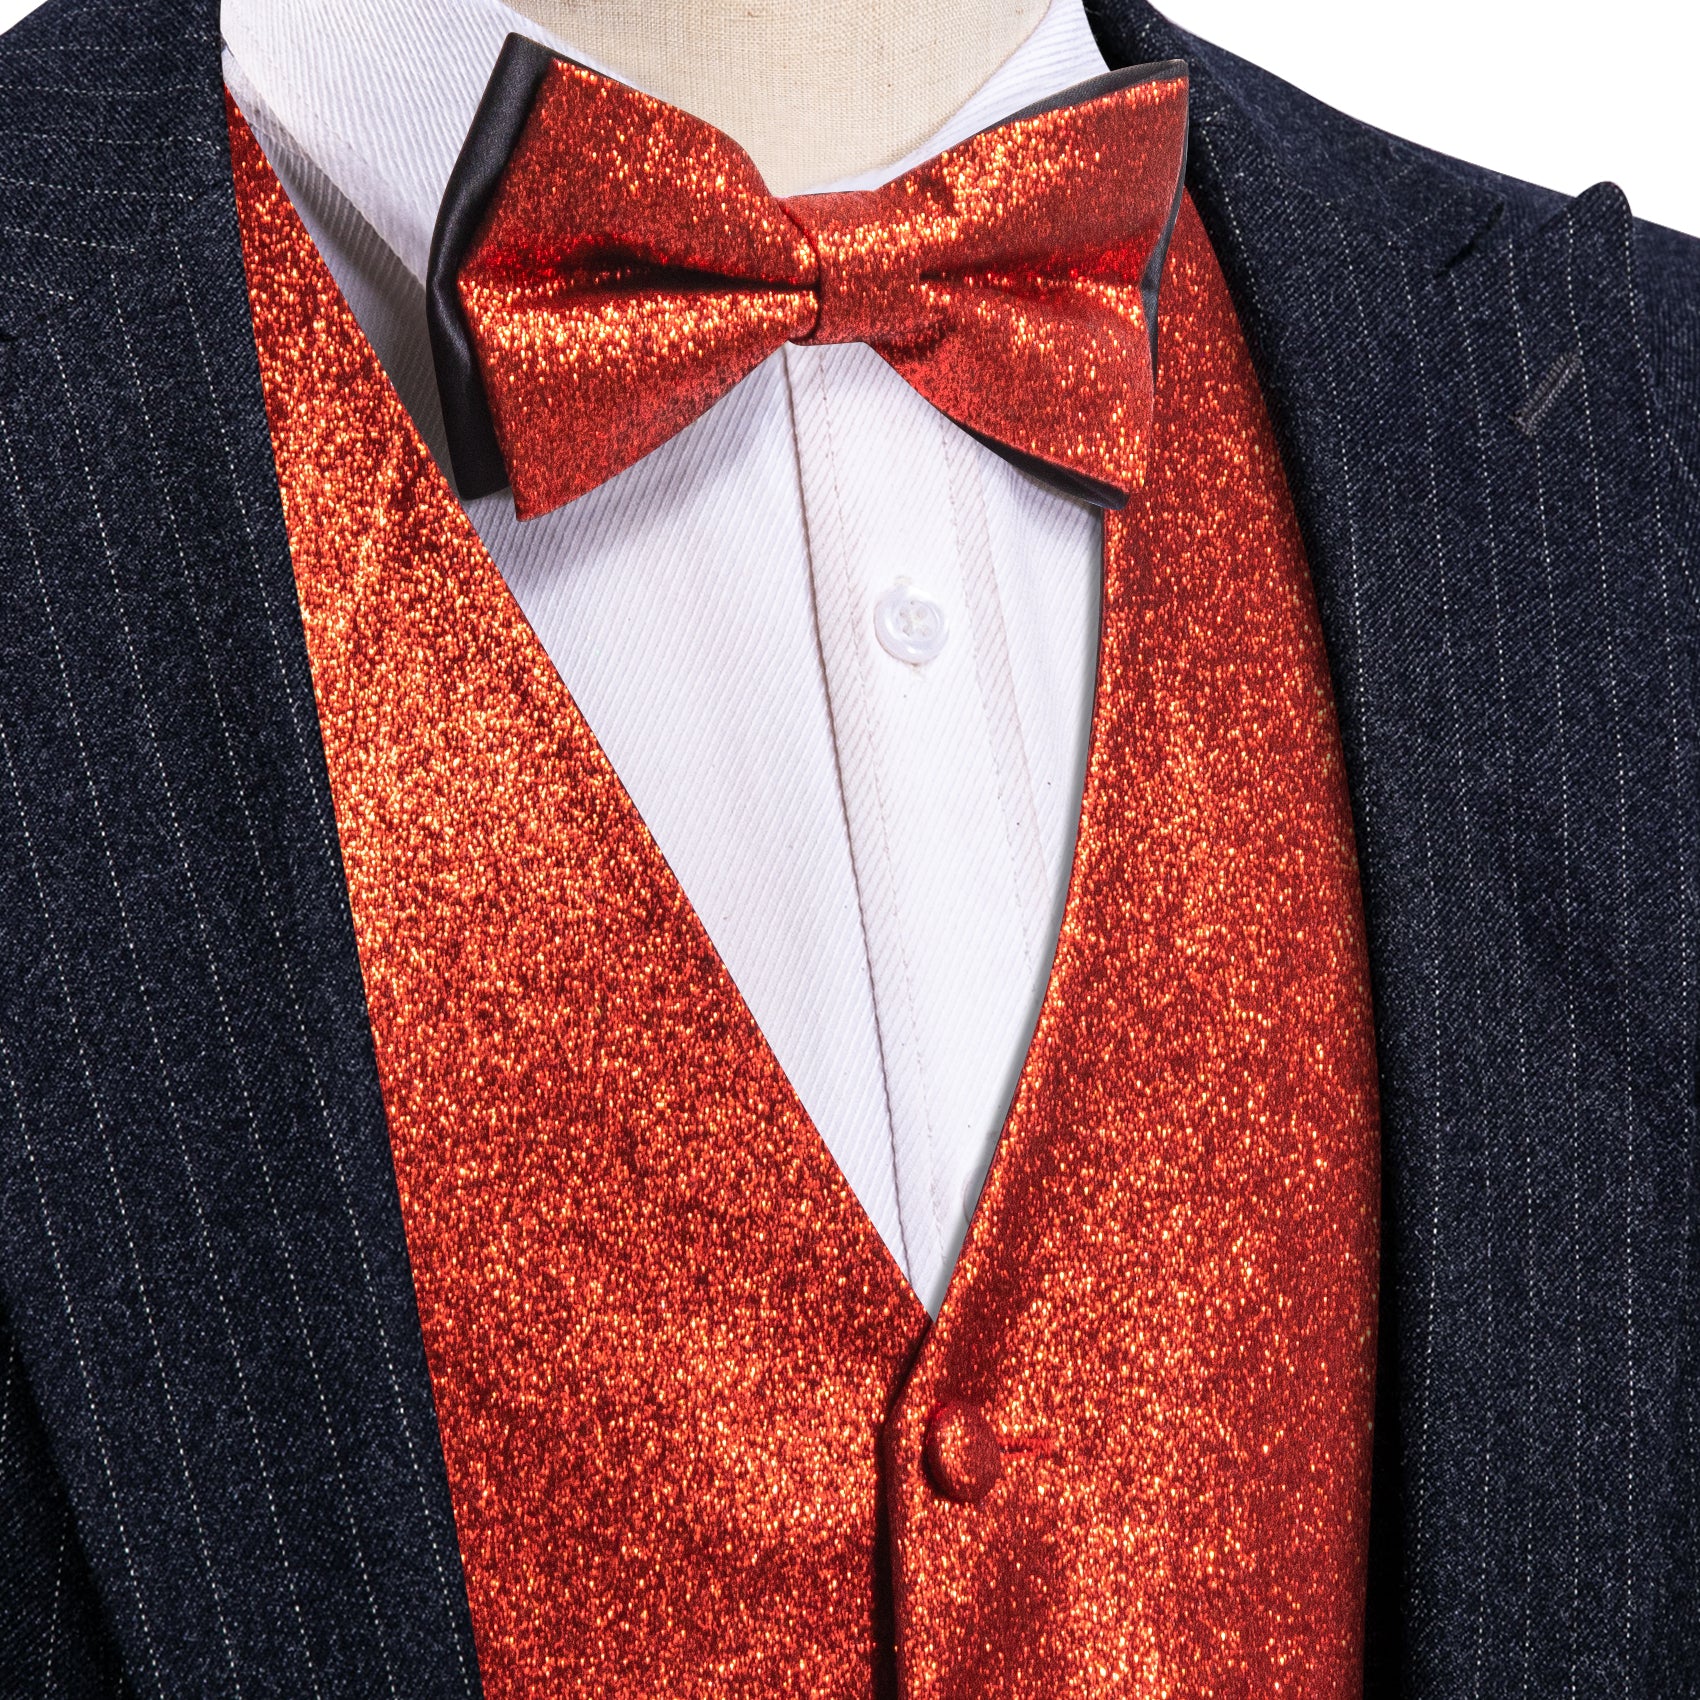 Shining Men's Orange Silk Bowtie V-Neck Waistcoat Vest Set